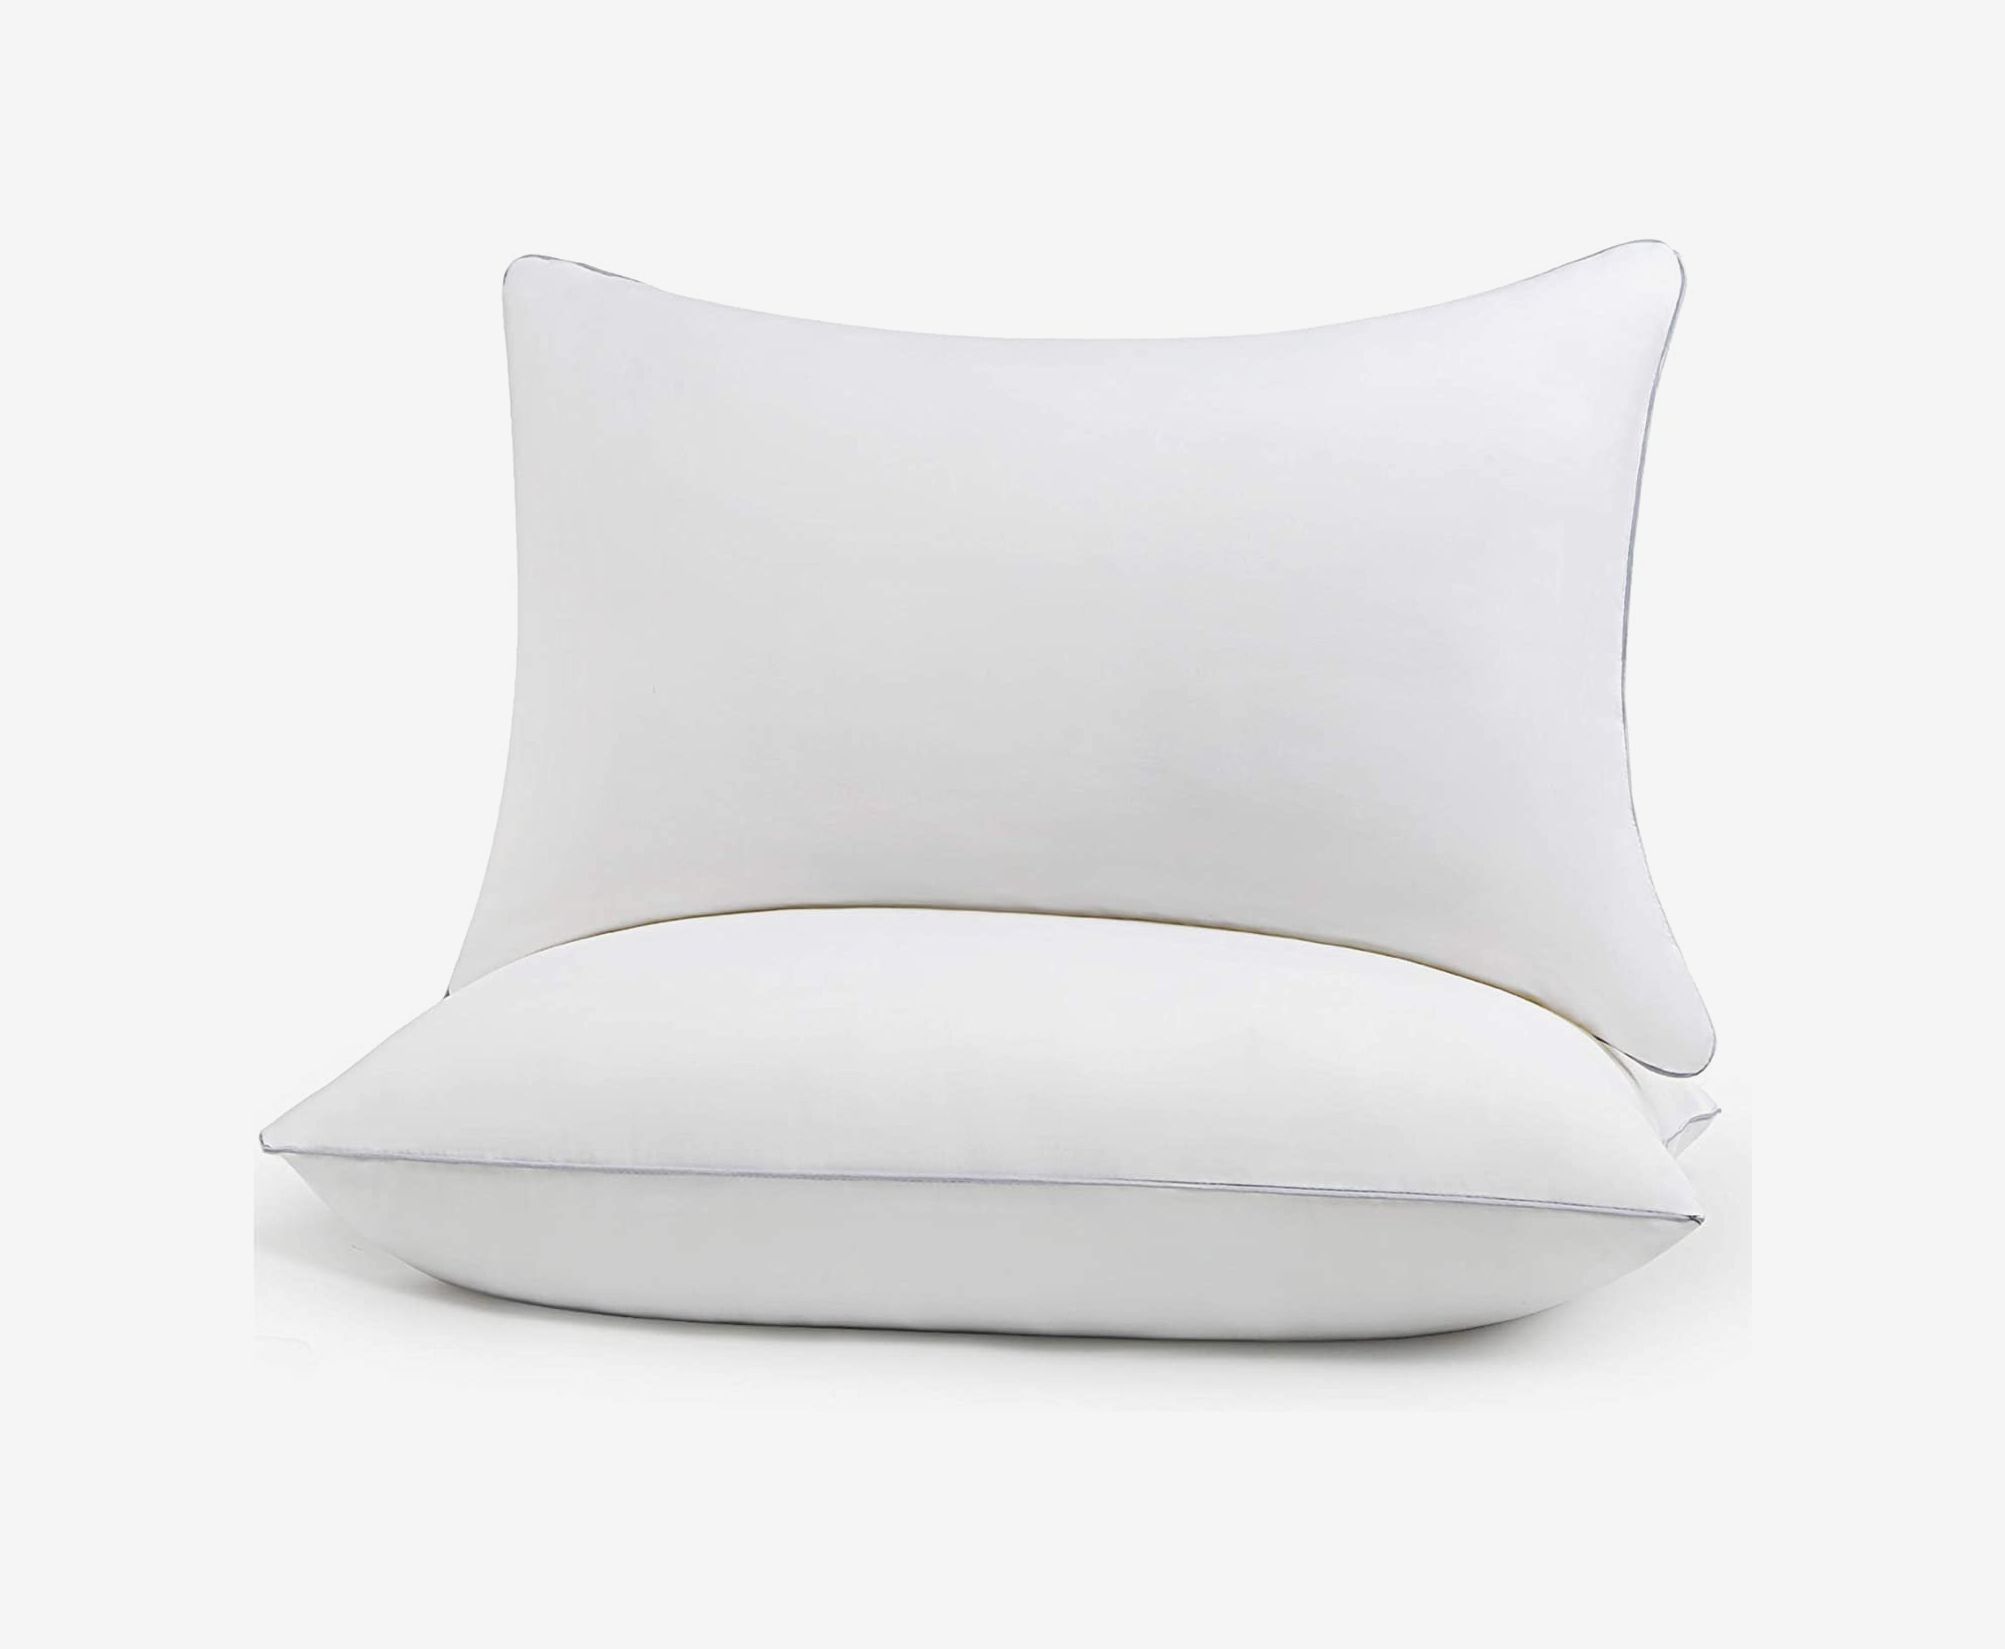 TWIN 2 Packs Luxury Sleeping Pillows,%100 Cotton 3 Standard Size Options